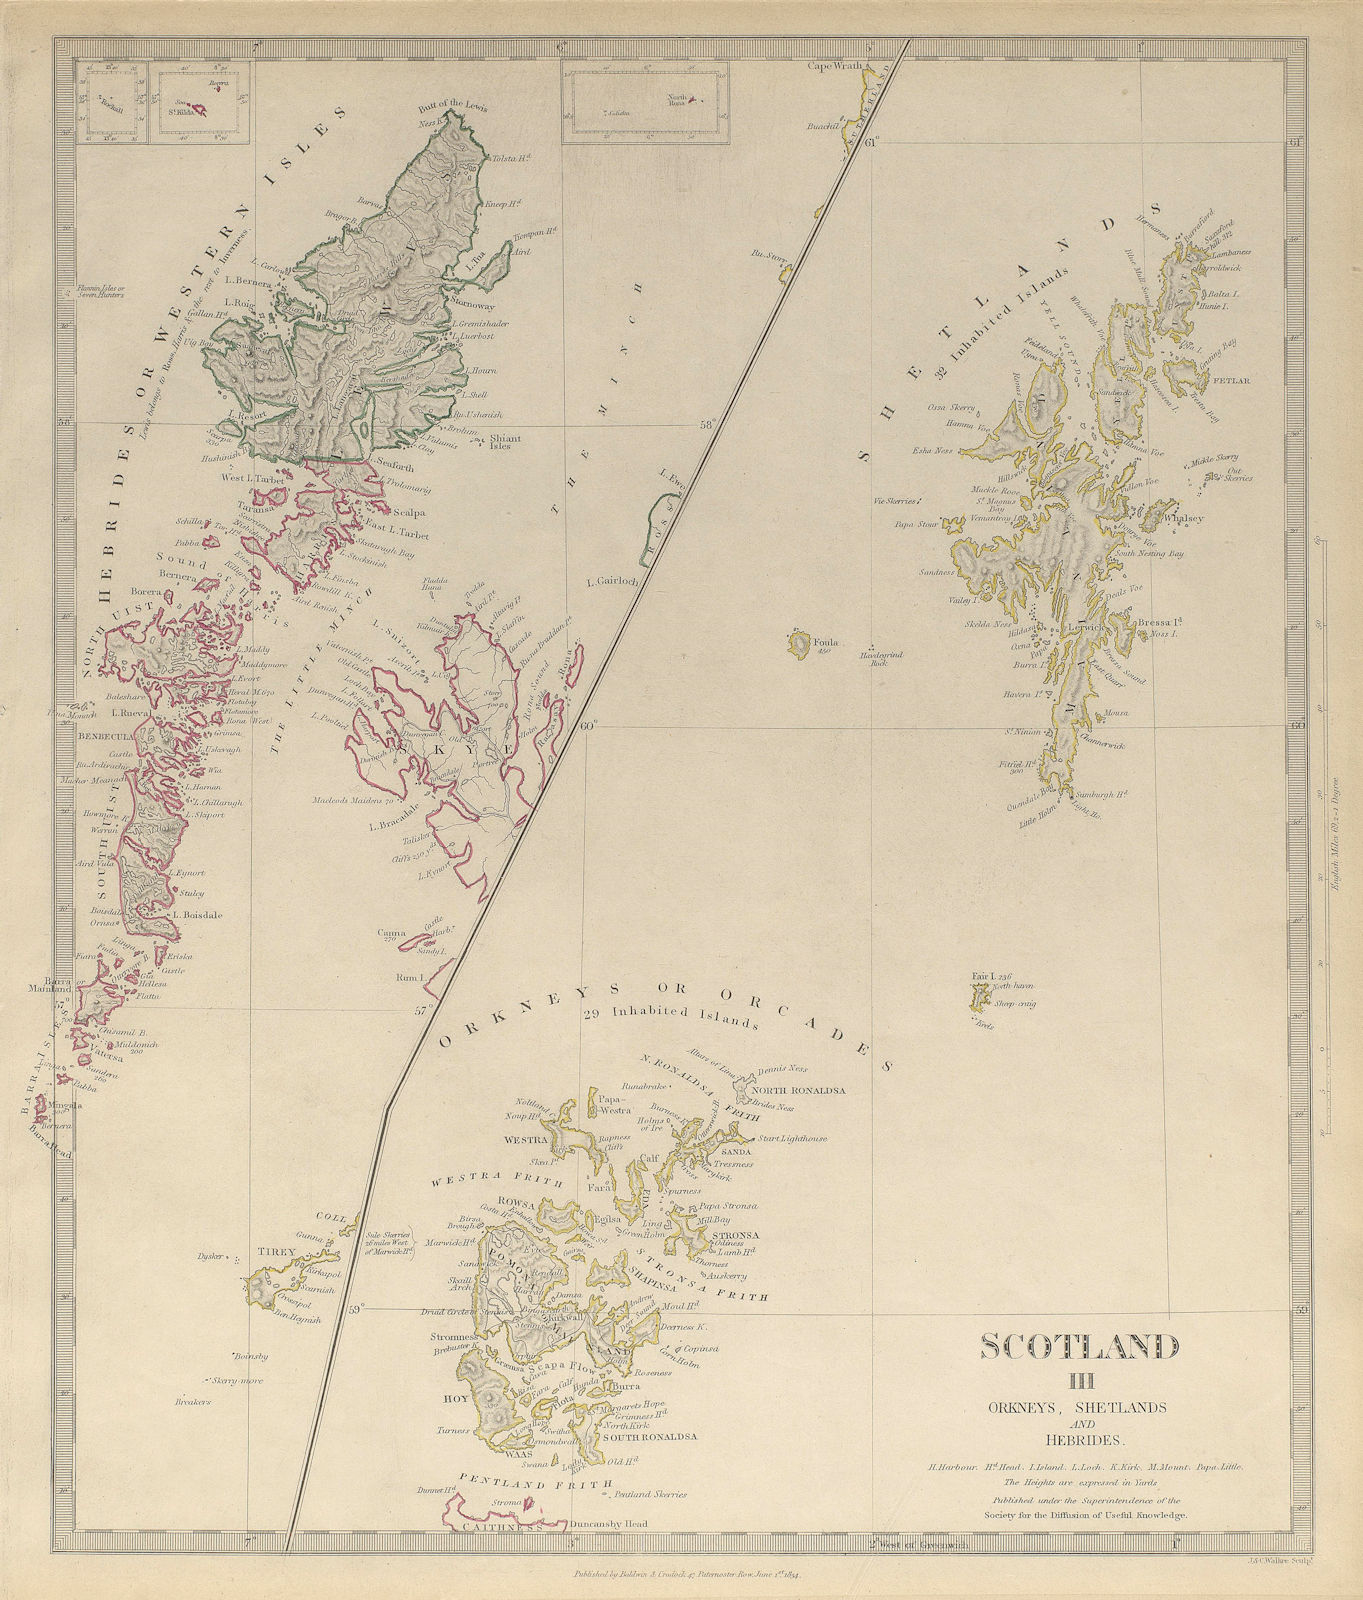 SCOTLAND ISLANDS. Western Isles. Orkneys, Shetlands and Hebrides.SDUK 1844 map